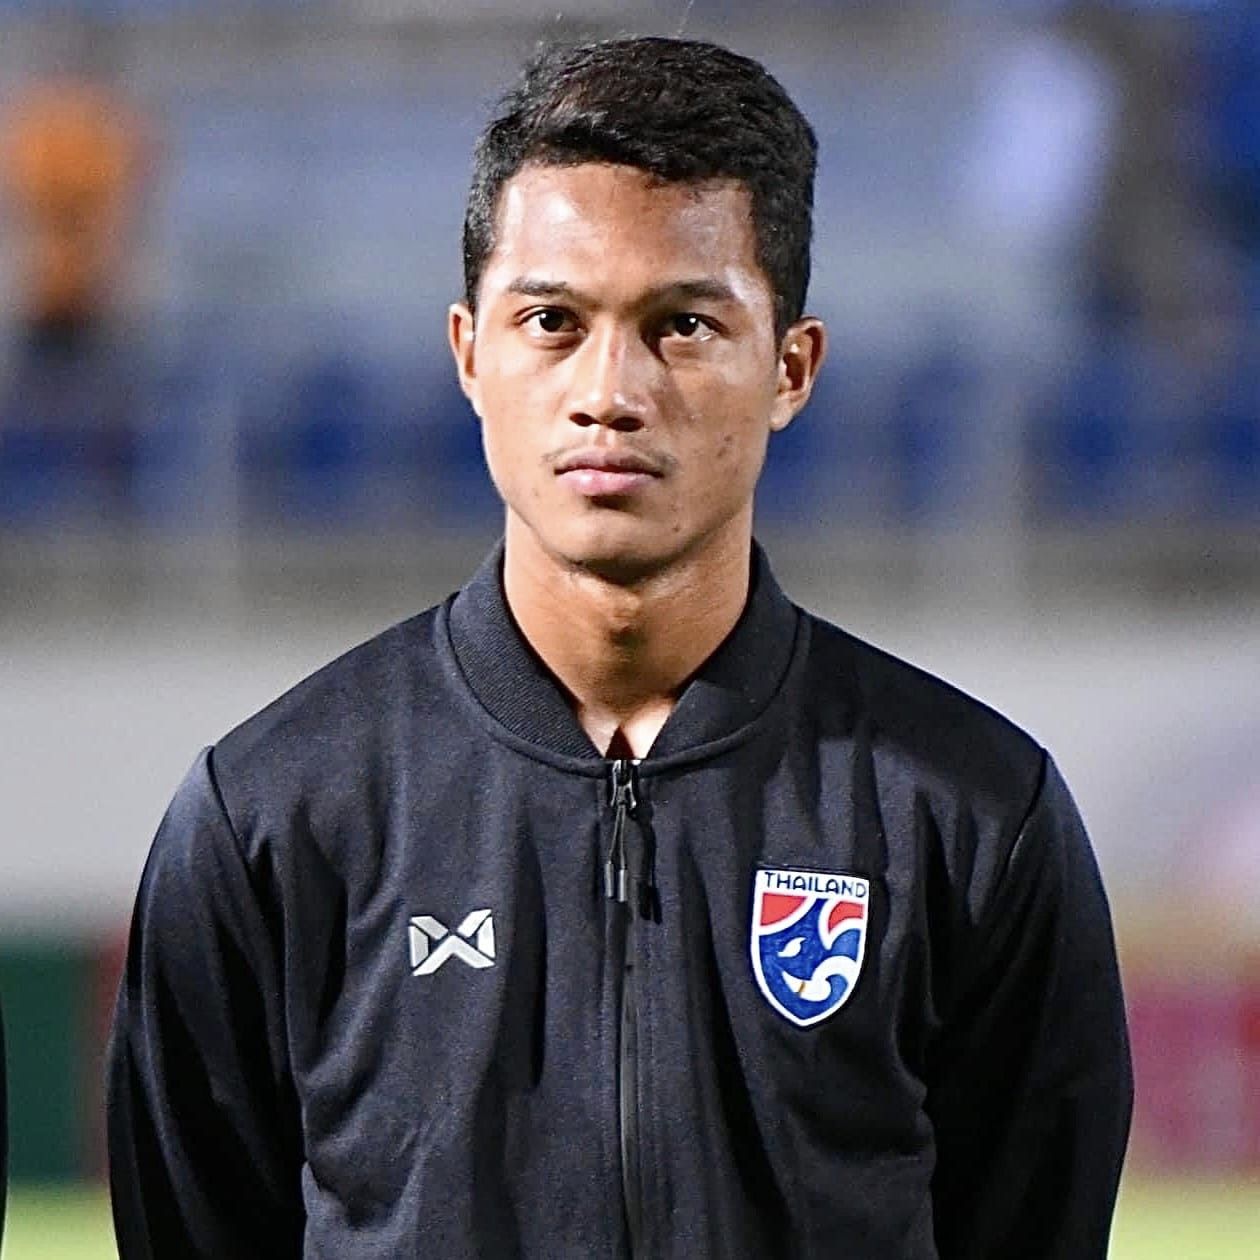 “Anant Yodsangwan”确认他已准备好保持自己的优势。弥补弱点，争取首次与泰国国家队比赛的机会 | Thaiger 泰国新闻